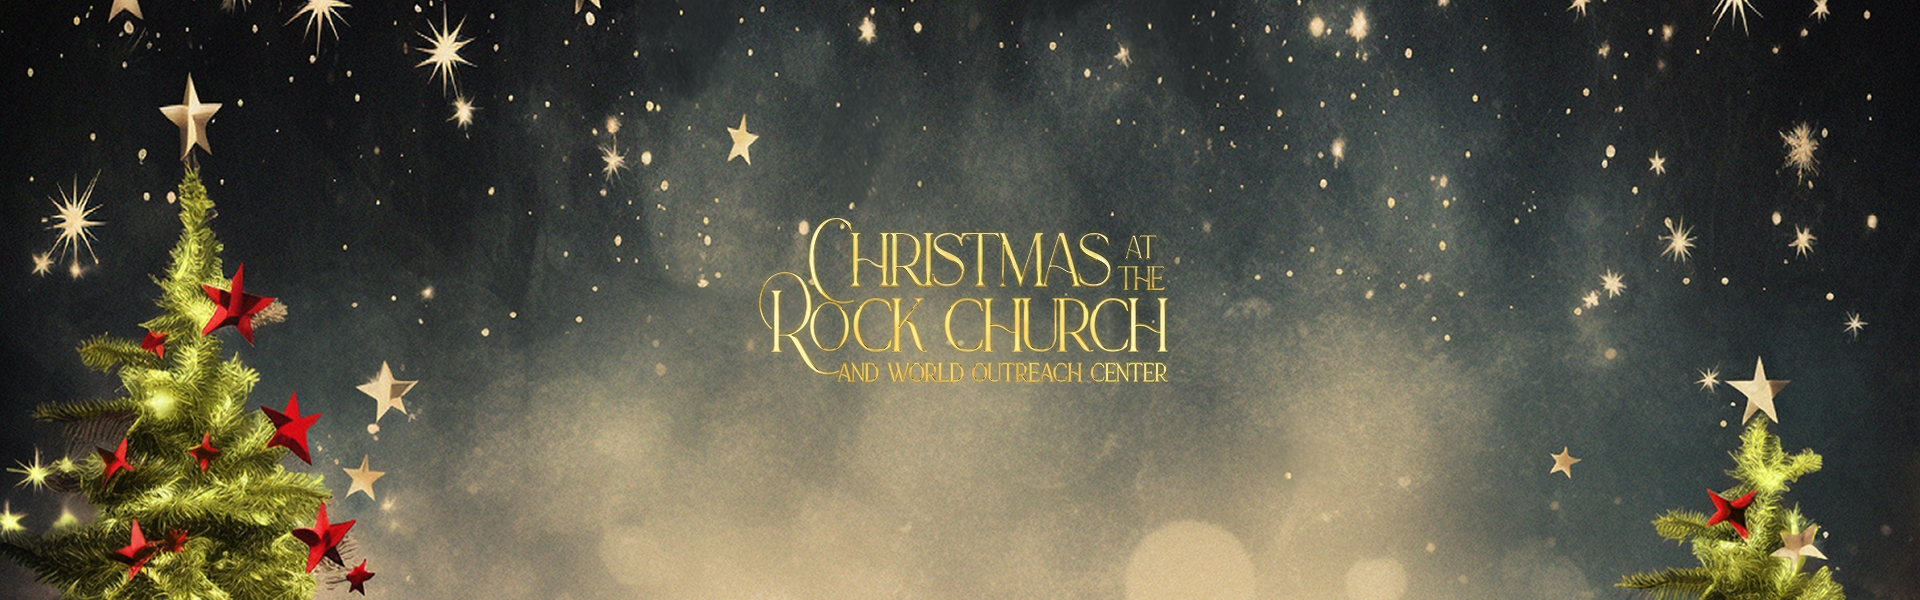 The Rock Church - The Rock Church Watertown NY